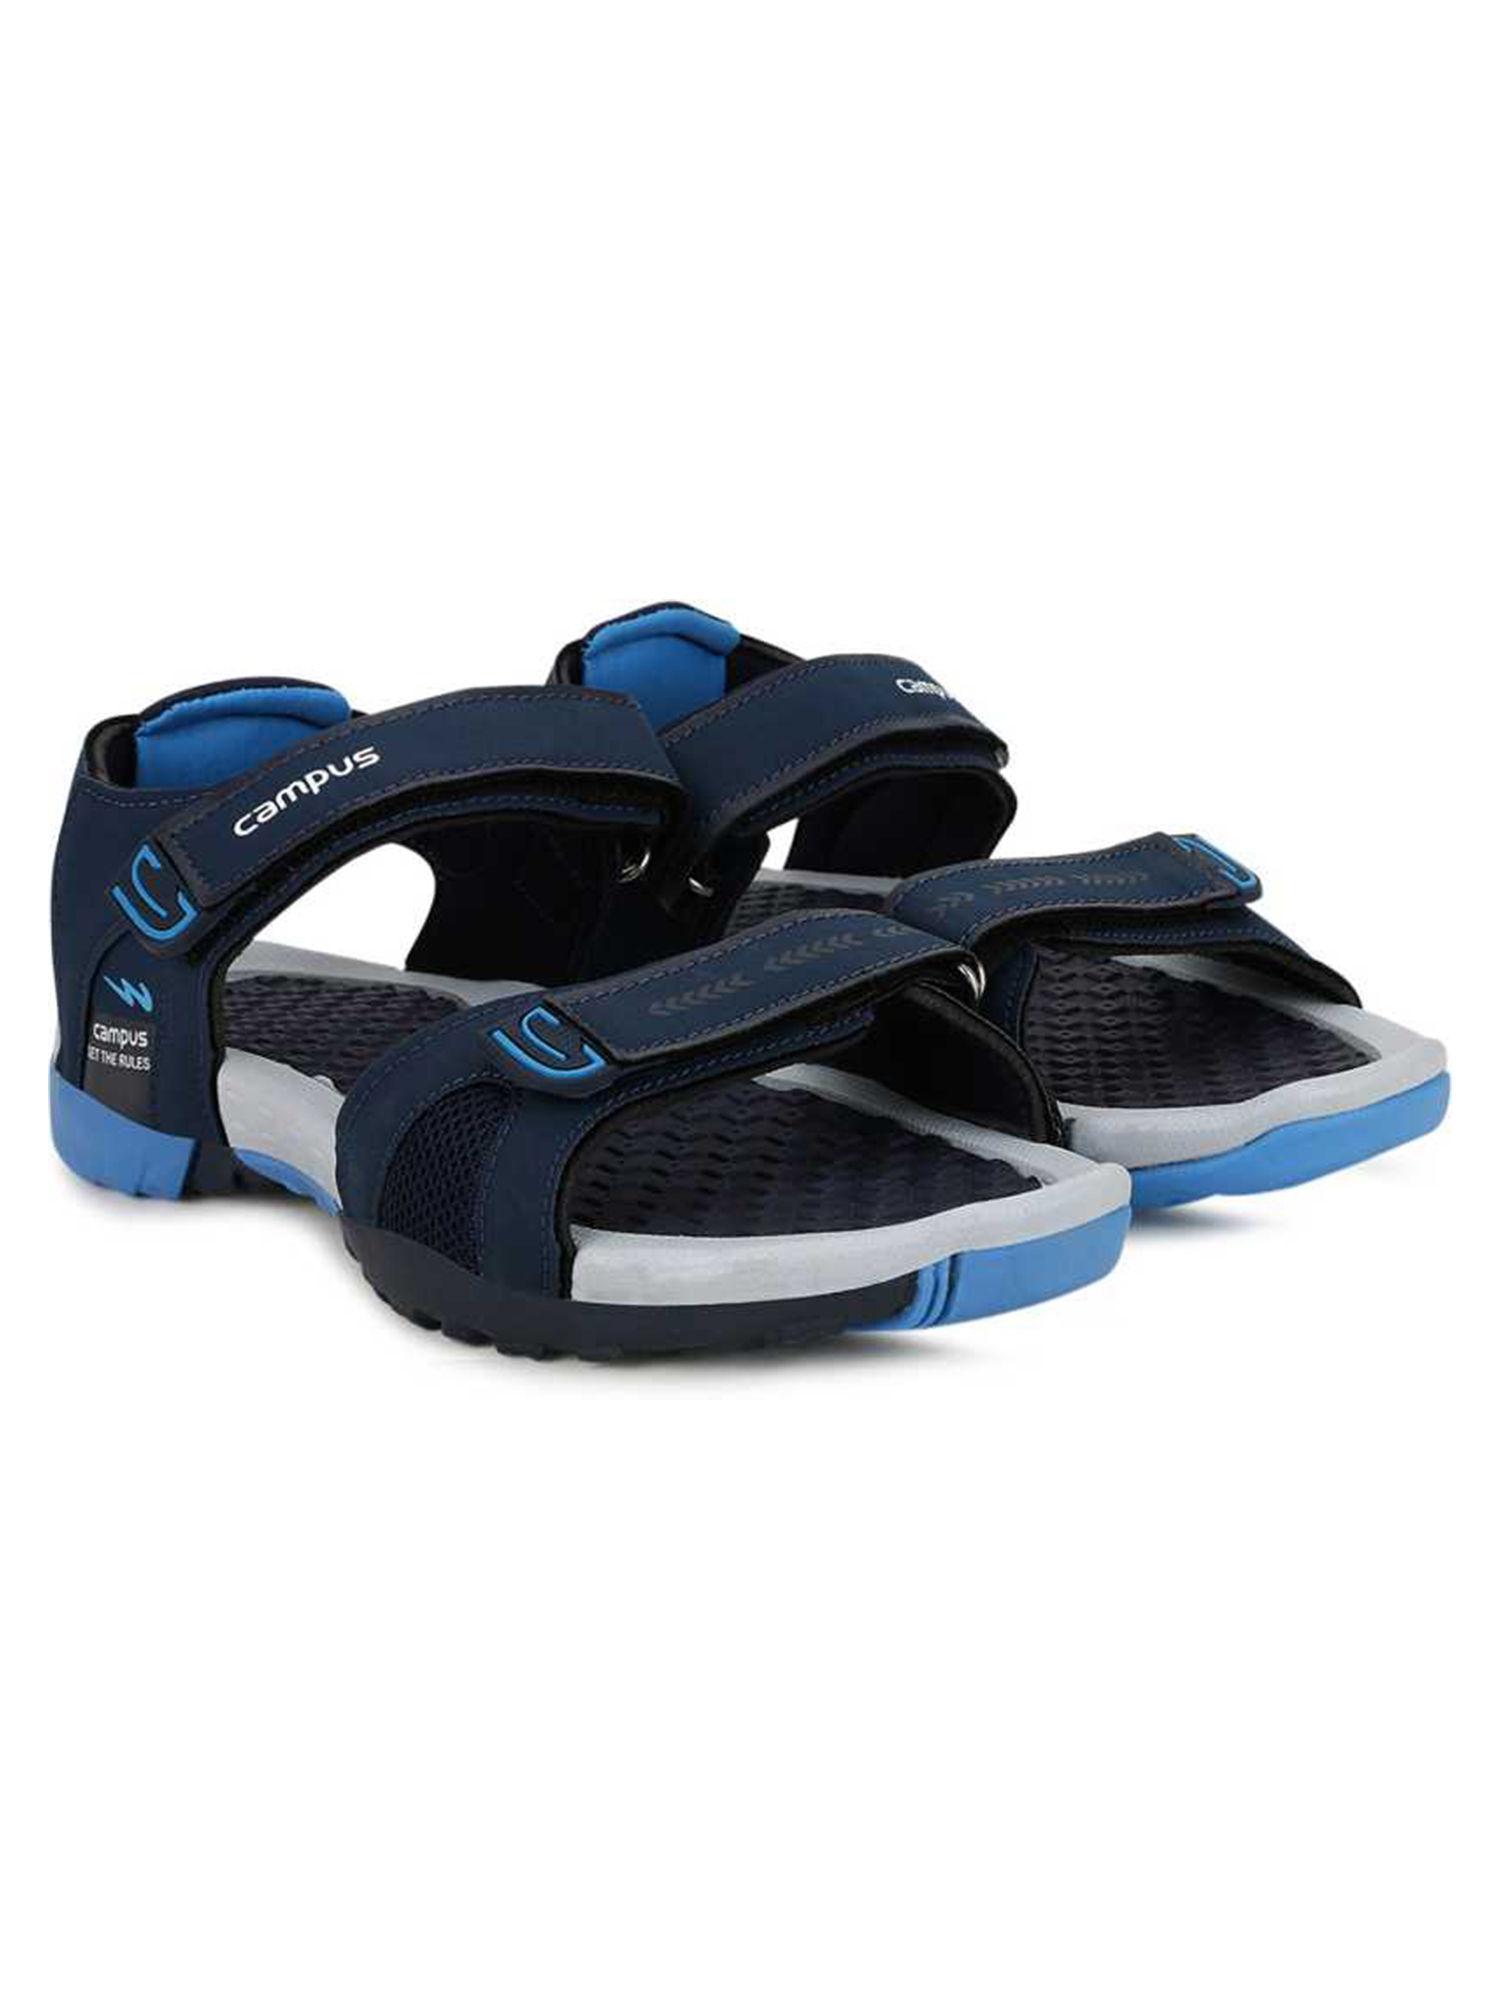 2gc-18-navy-blue-sandals-for-men